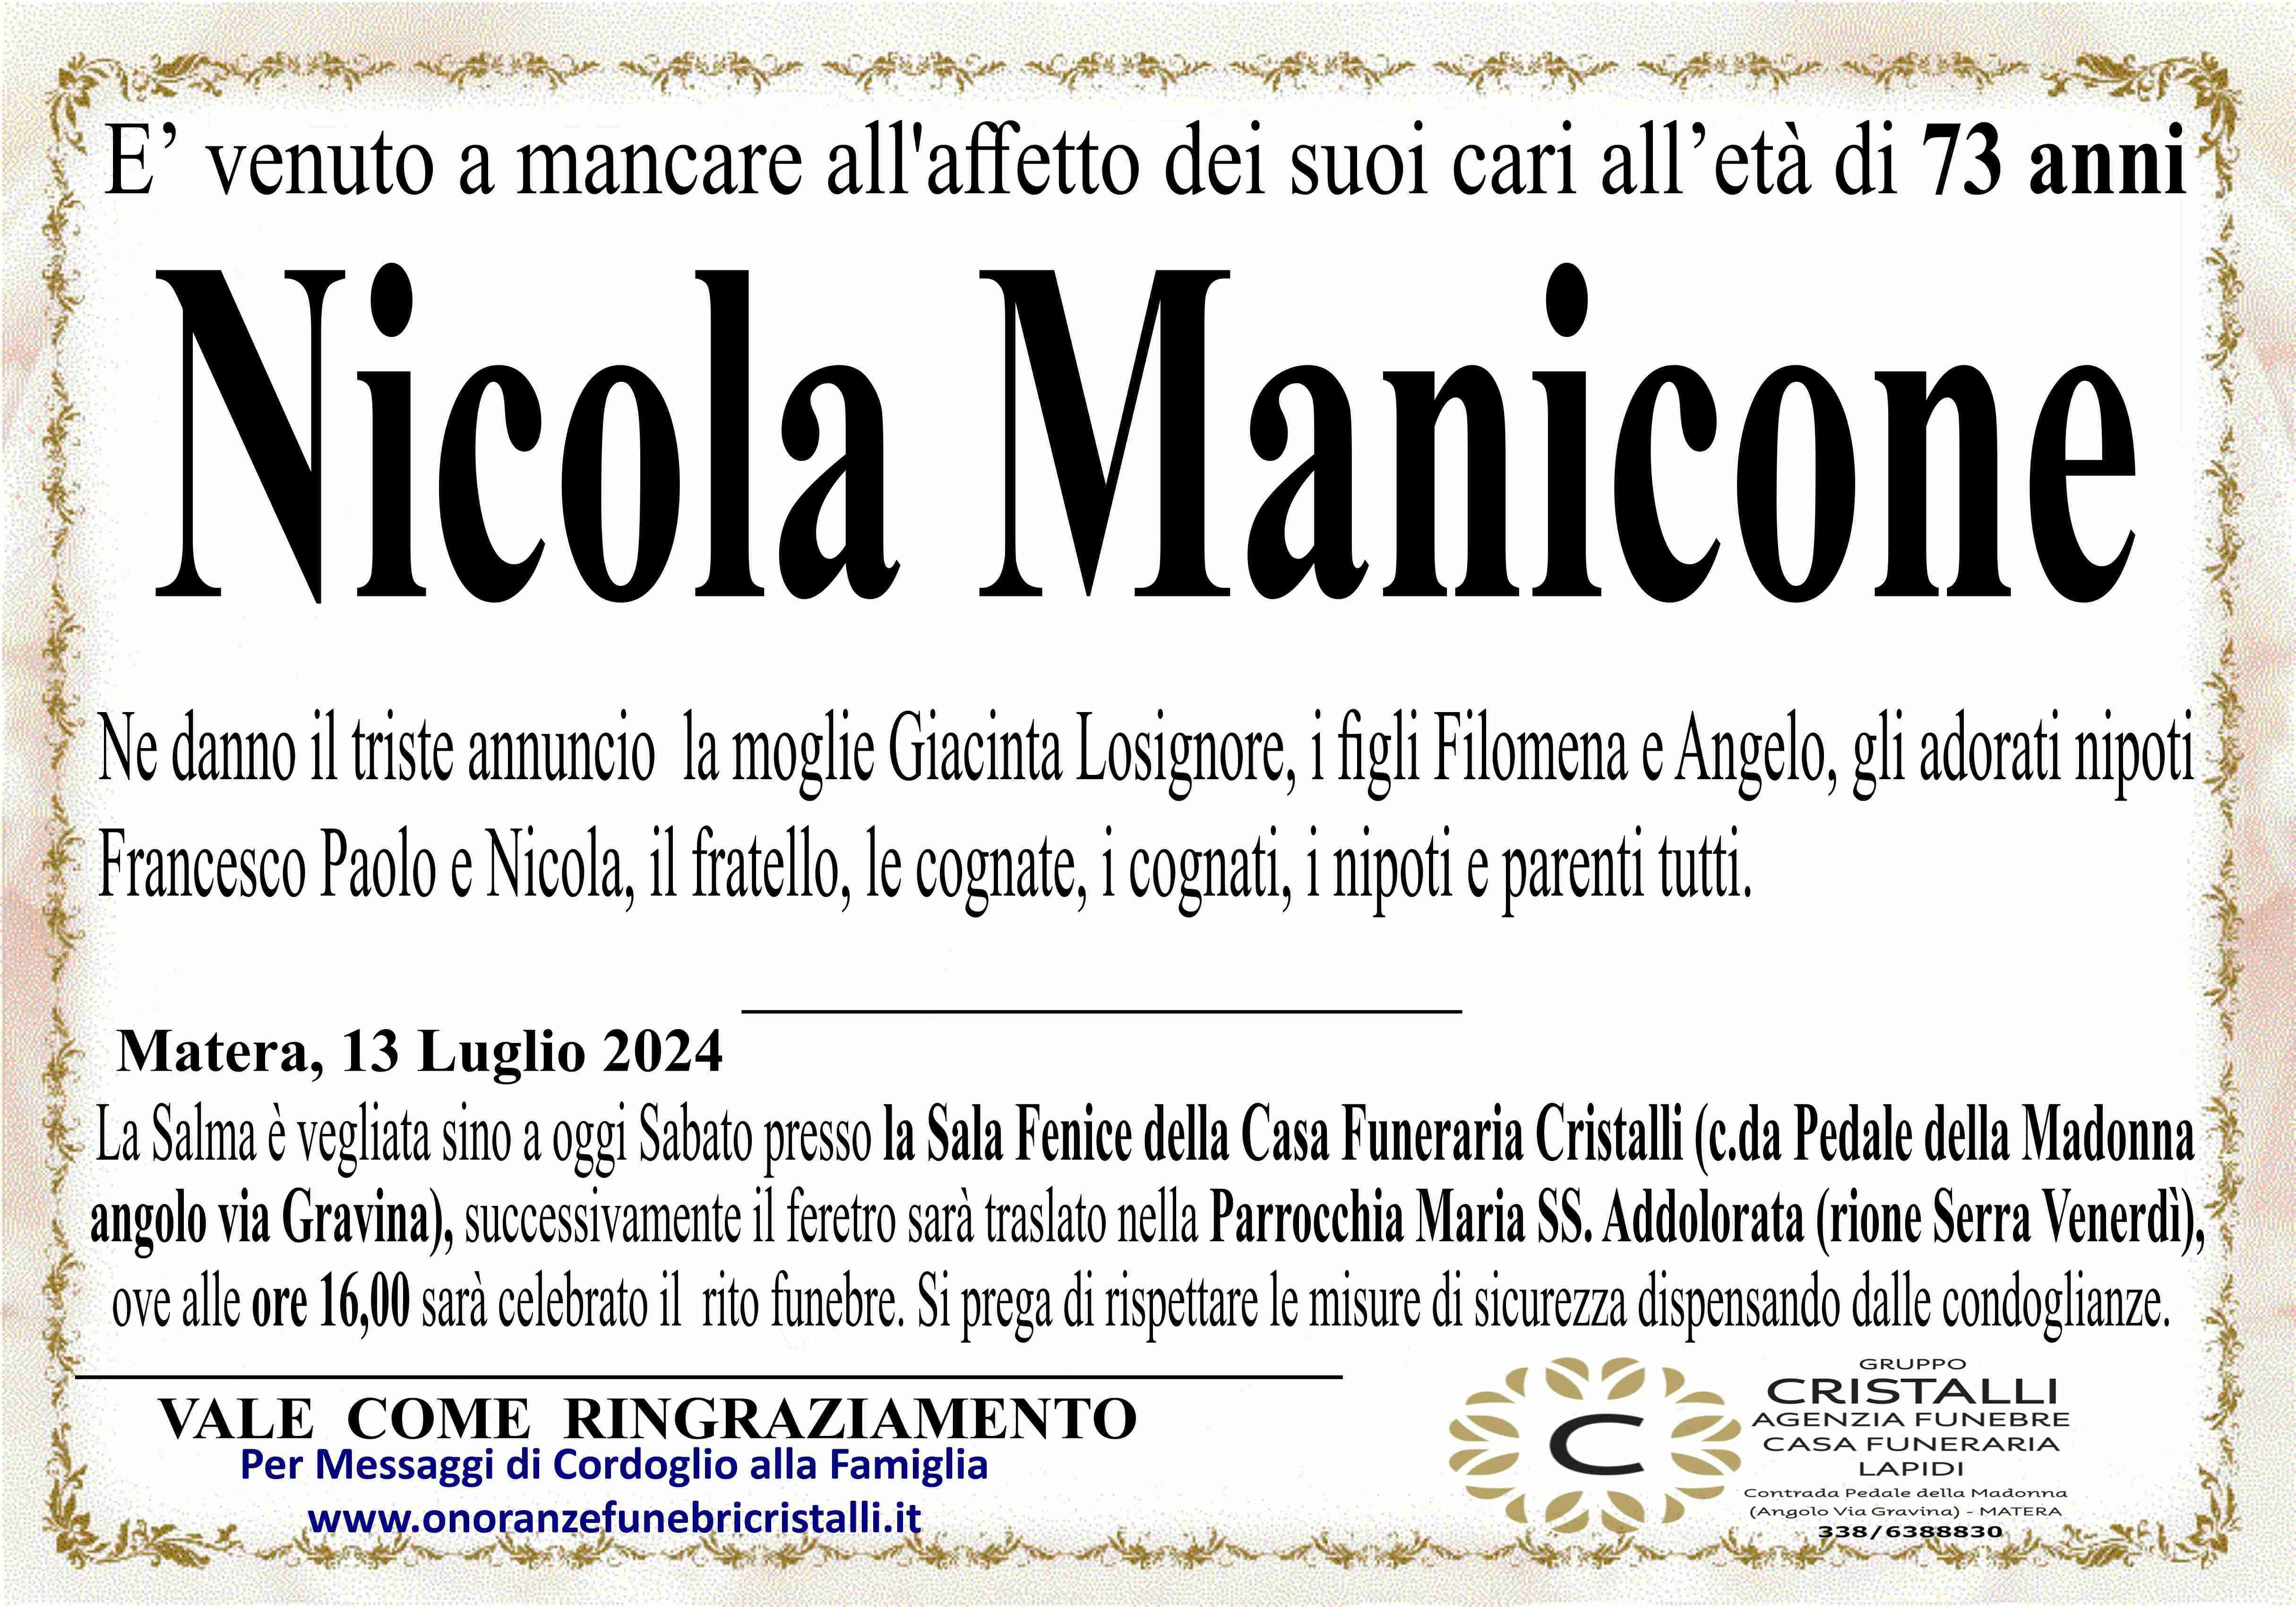 Nicola Manicone